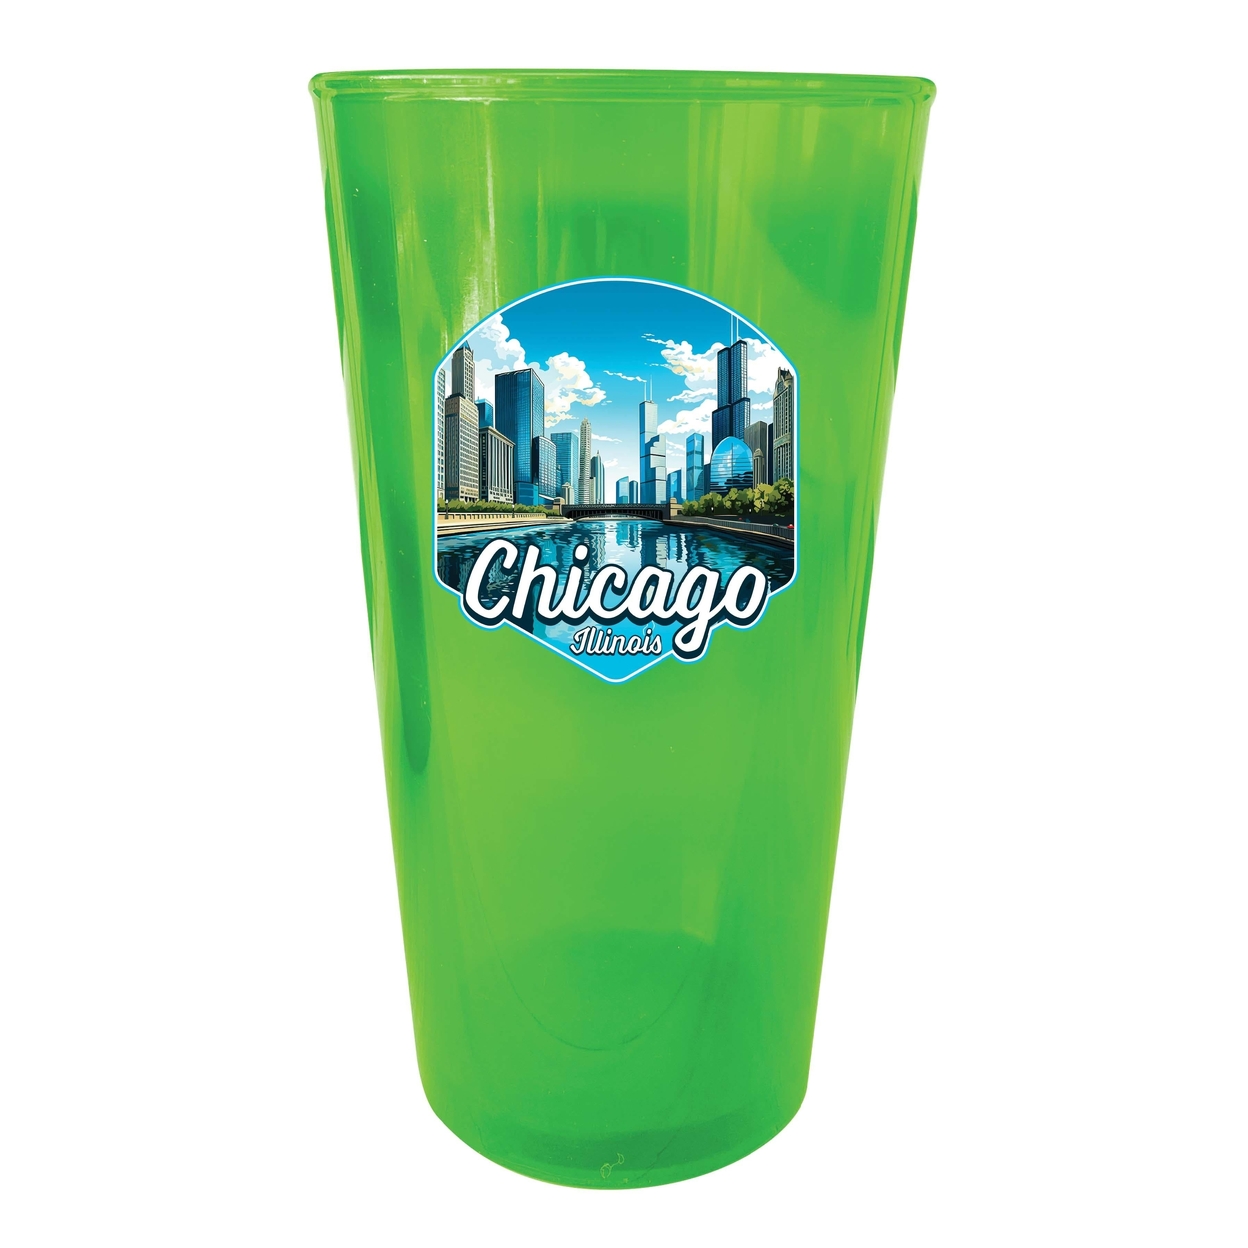 Chicago Illinois A Souvenir Plastic 16 Oz Pint - Green,,4-Pack